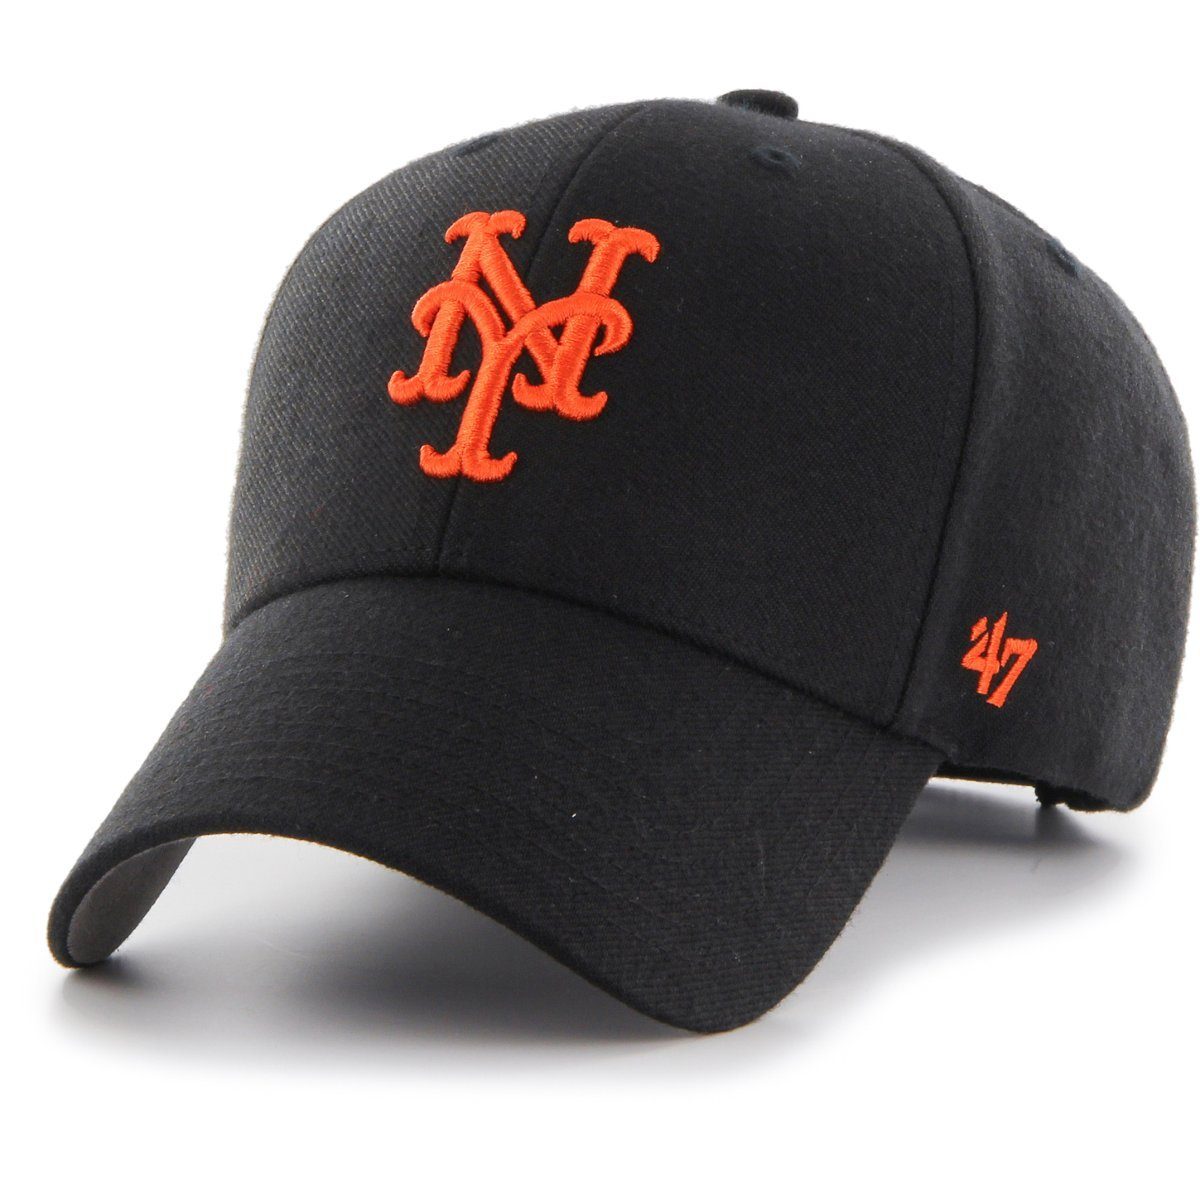 '47 Brand Trucker Cap Relaxed Fit MLB New York Mets